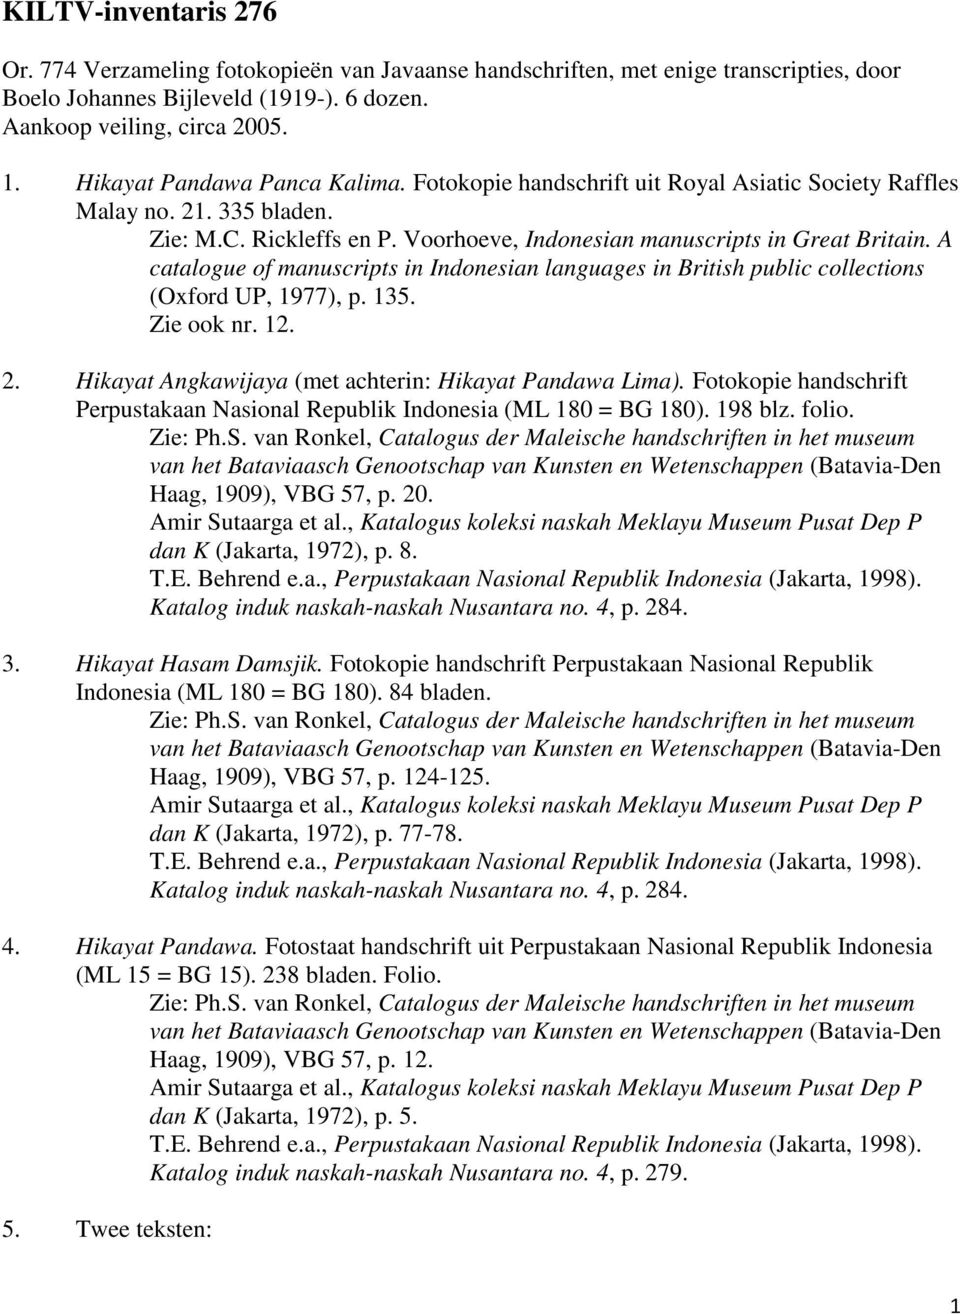 Fotokopie handschrift Perpustakaan Nasional Republik Indonesia (ML 180 = BG 180). 198 blz. folio. Haag, 1909), VBG 57, p. 20. dan K (Jakarta, 1972), p. 8. Katalog induk naskah-naskah Nusantara no.